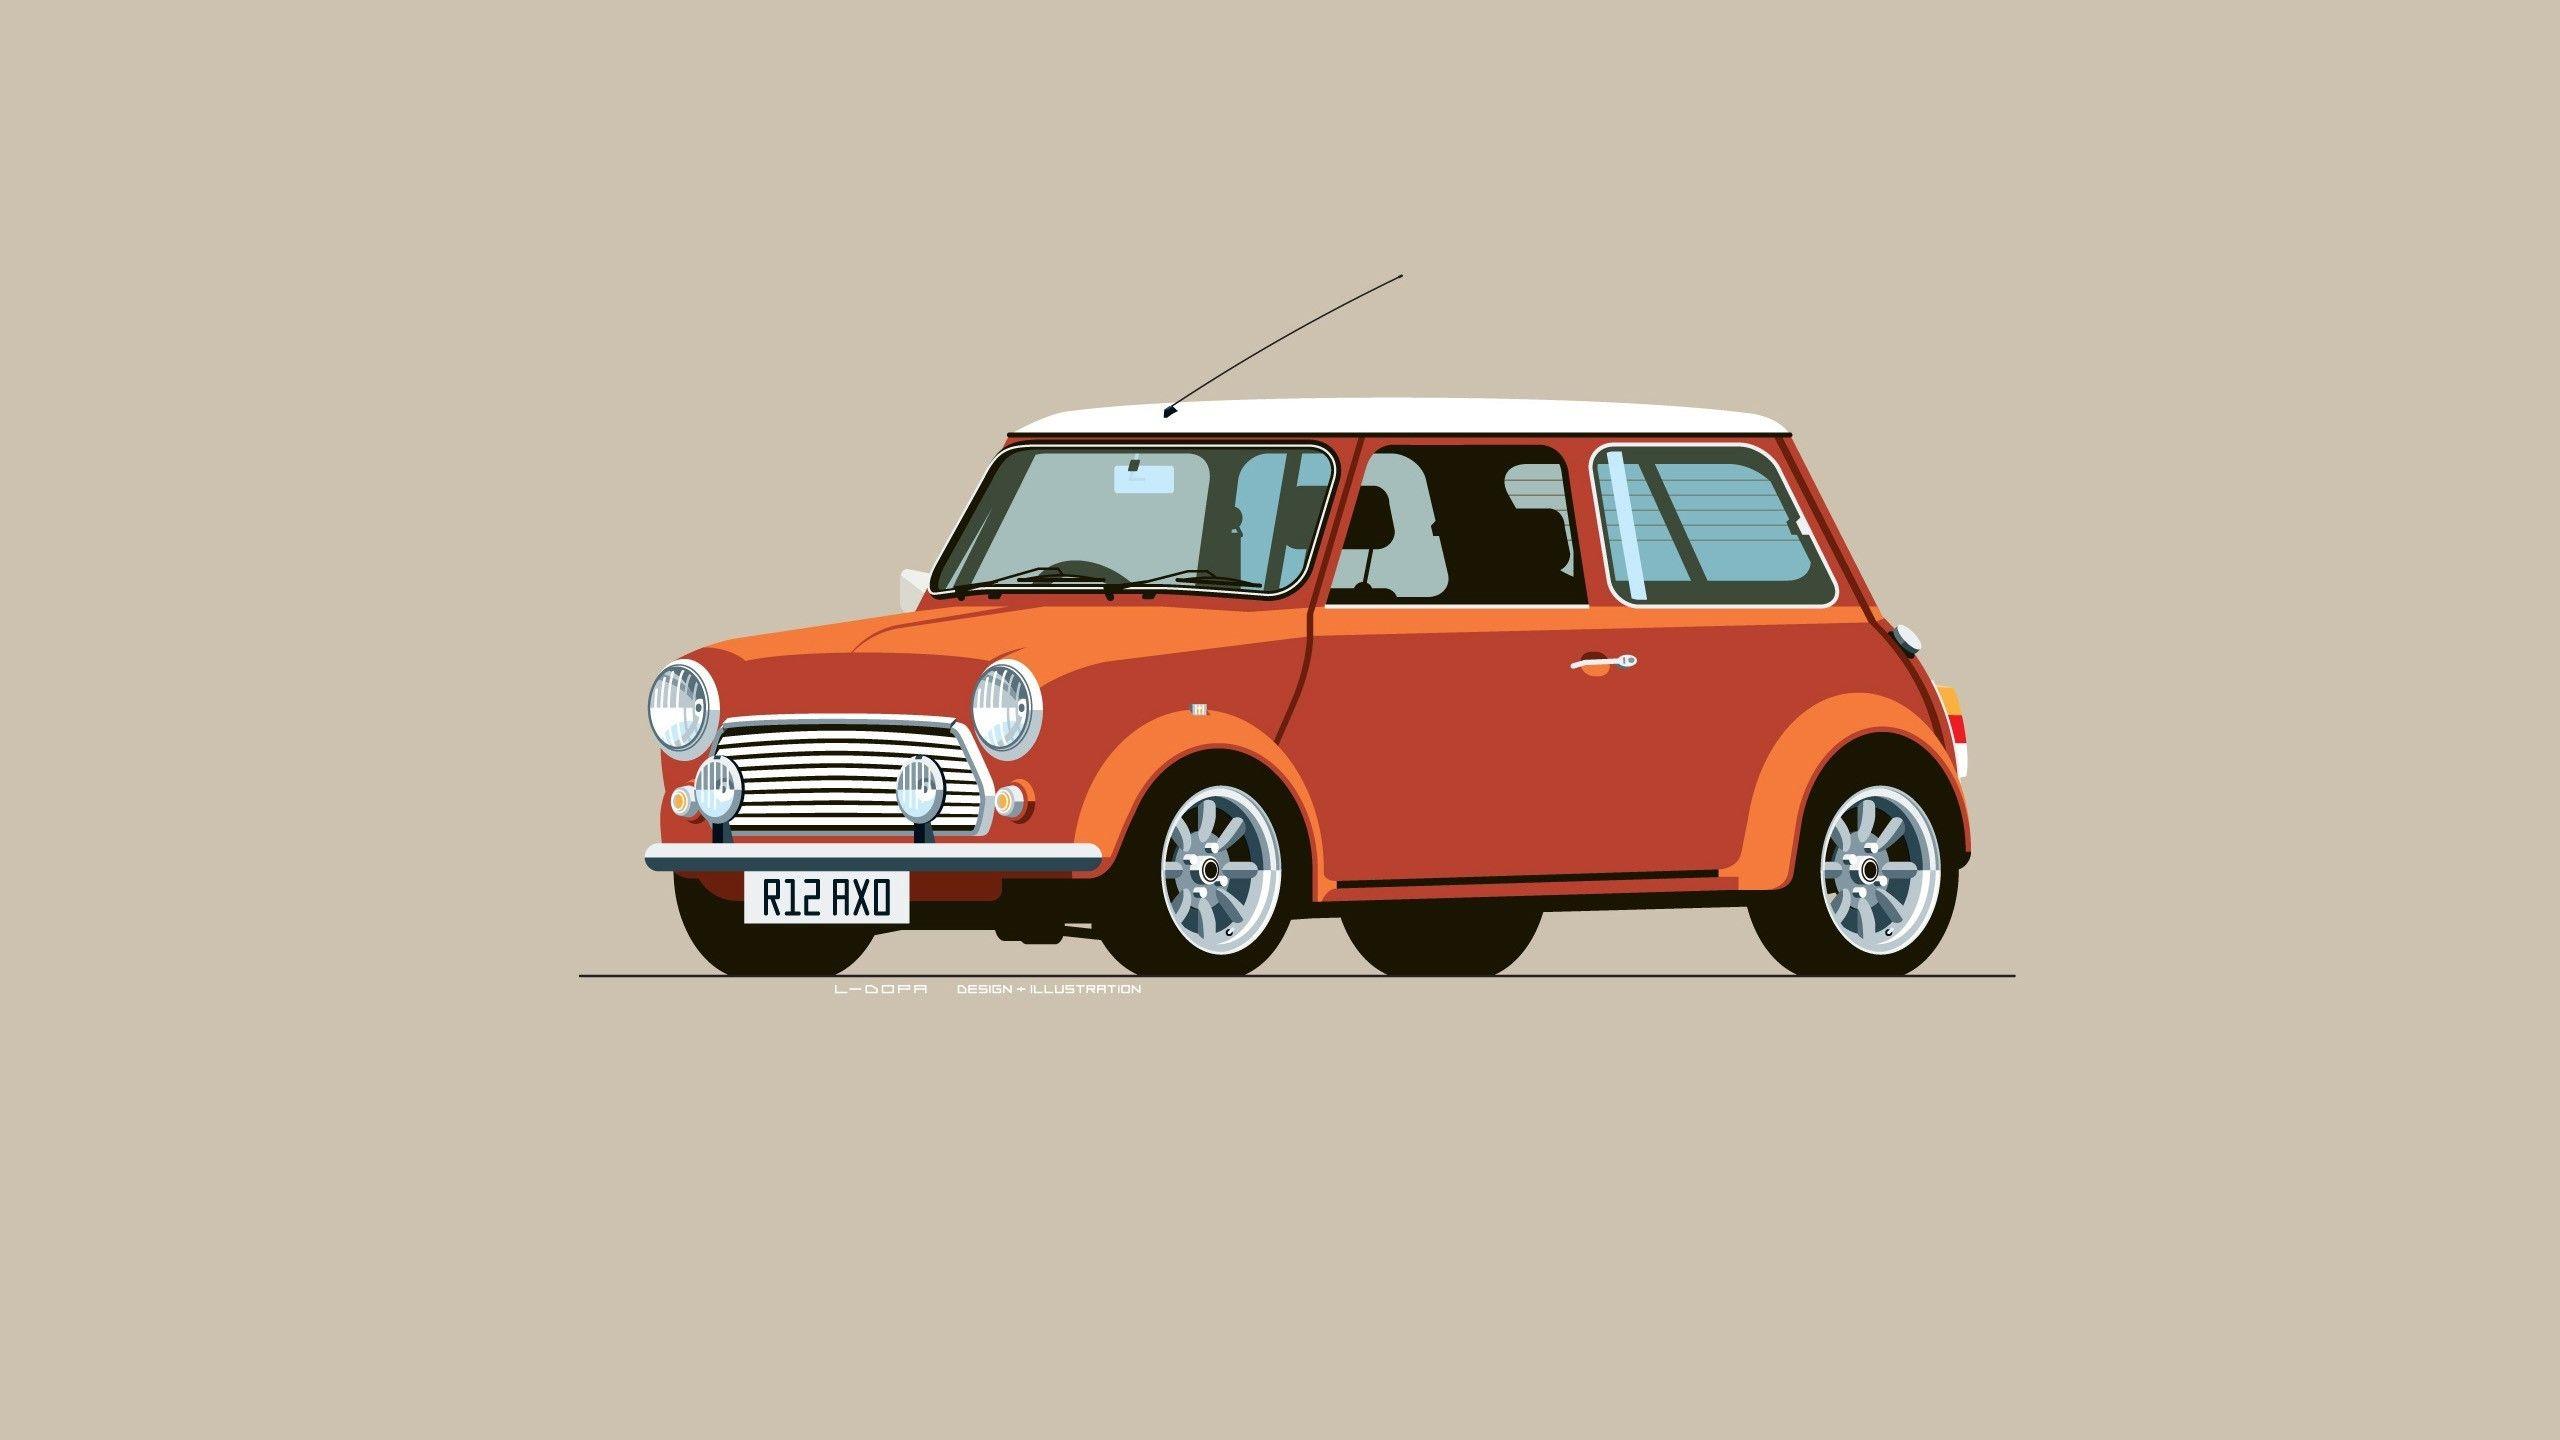 Simple Red Car Logo - car red cars mini cooper digital art minimalism simple background ...